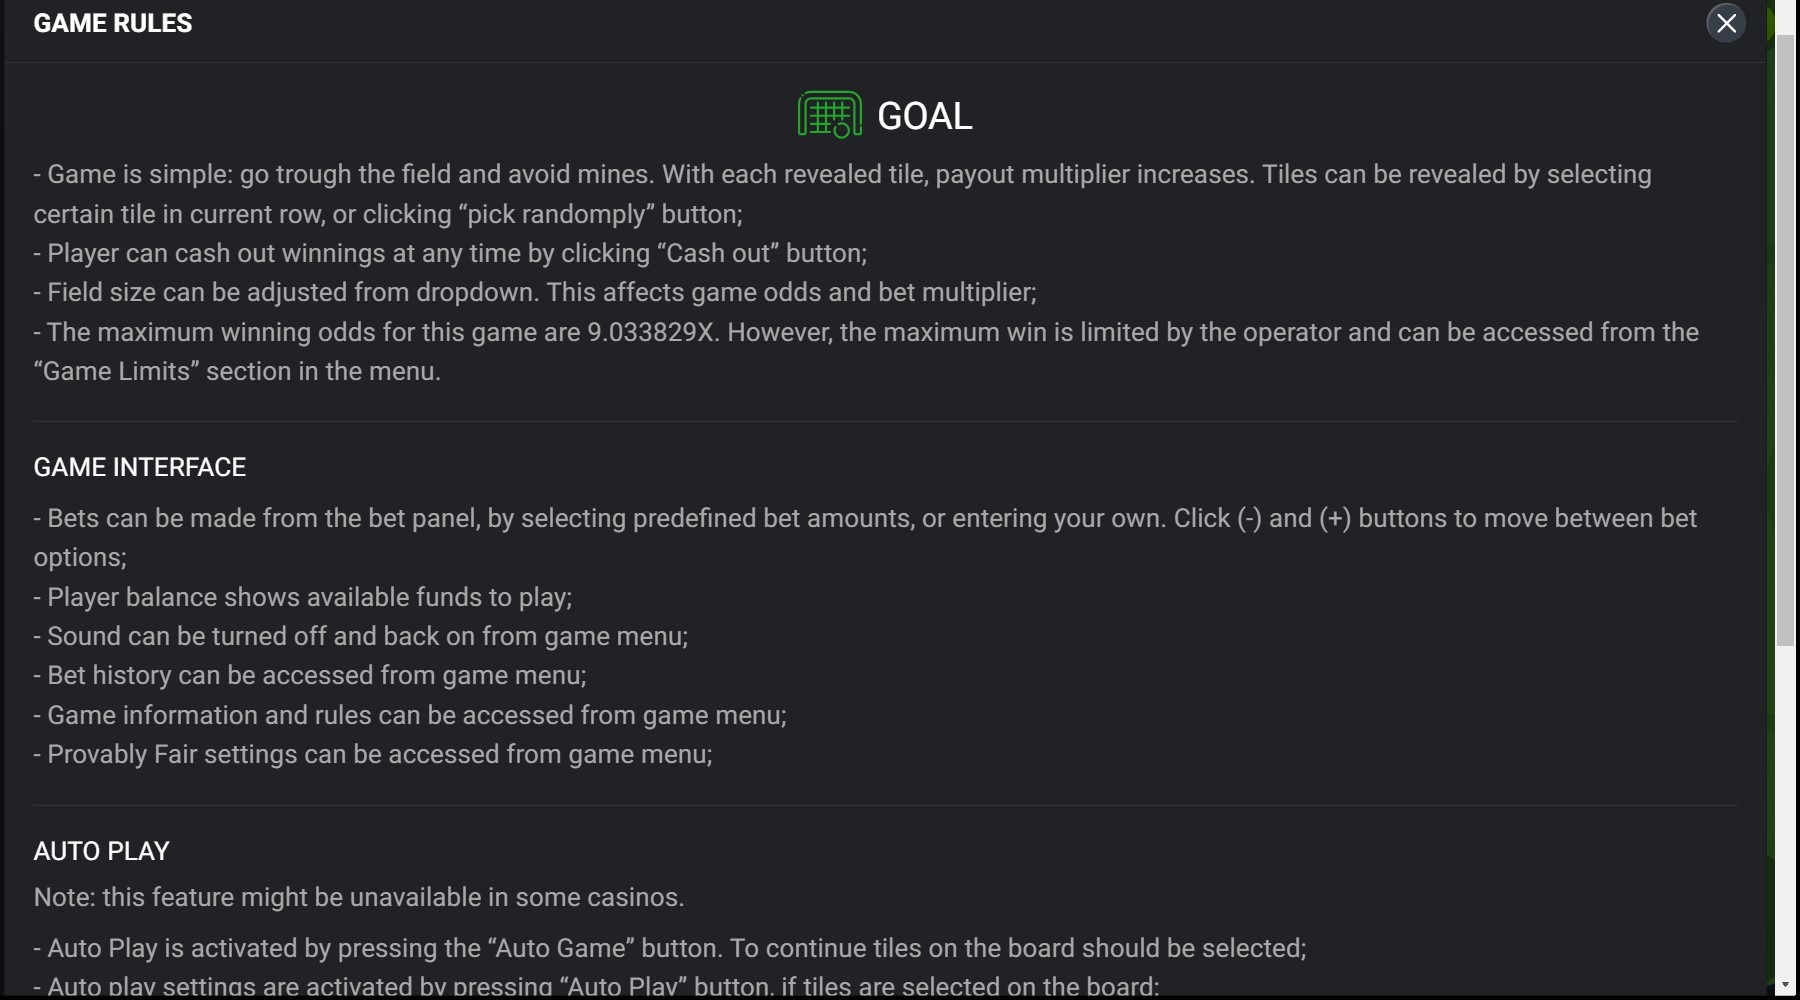 Goal by Spribe गेम नियम